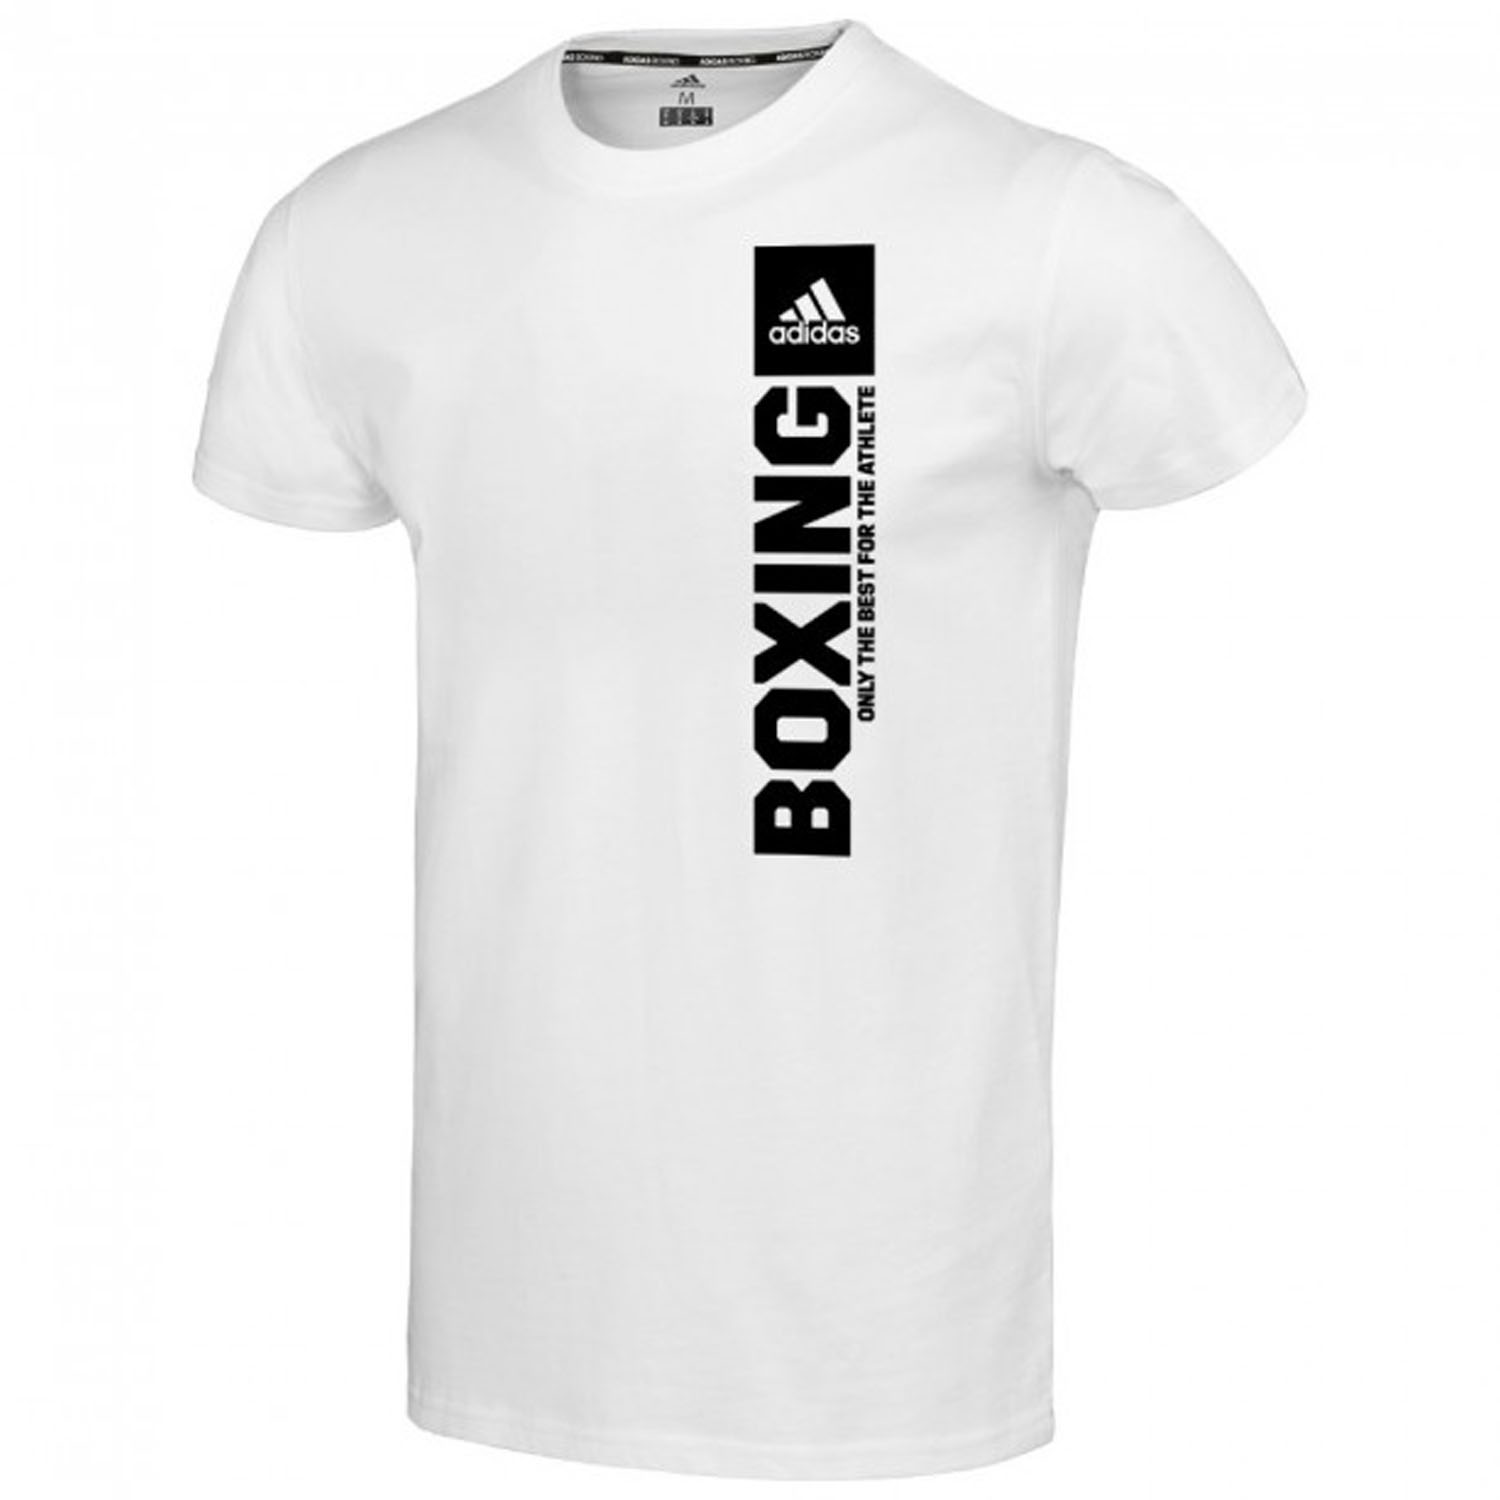 adidas T-Shirt, Community Vertical Boxing, white, M